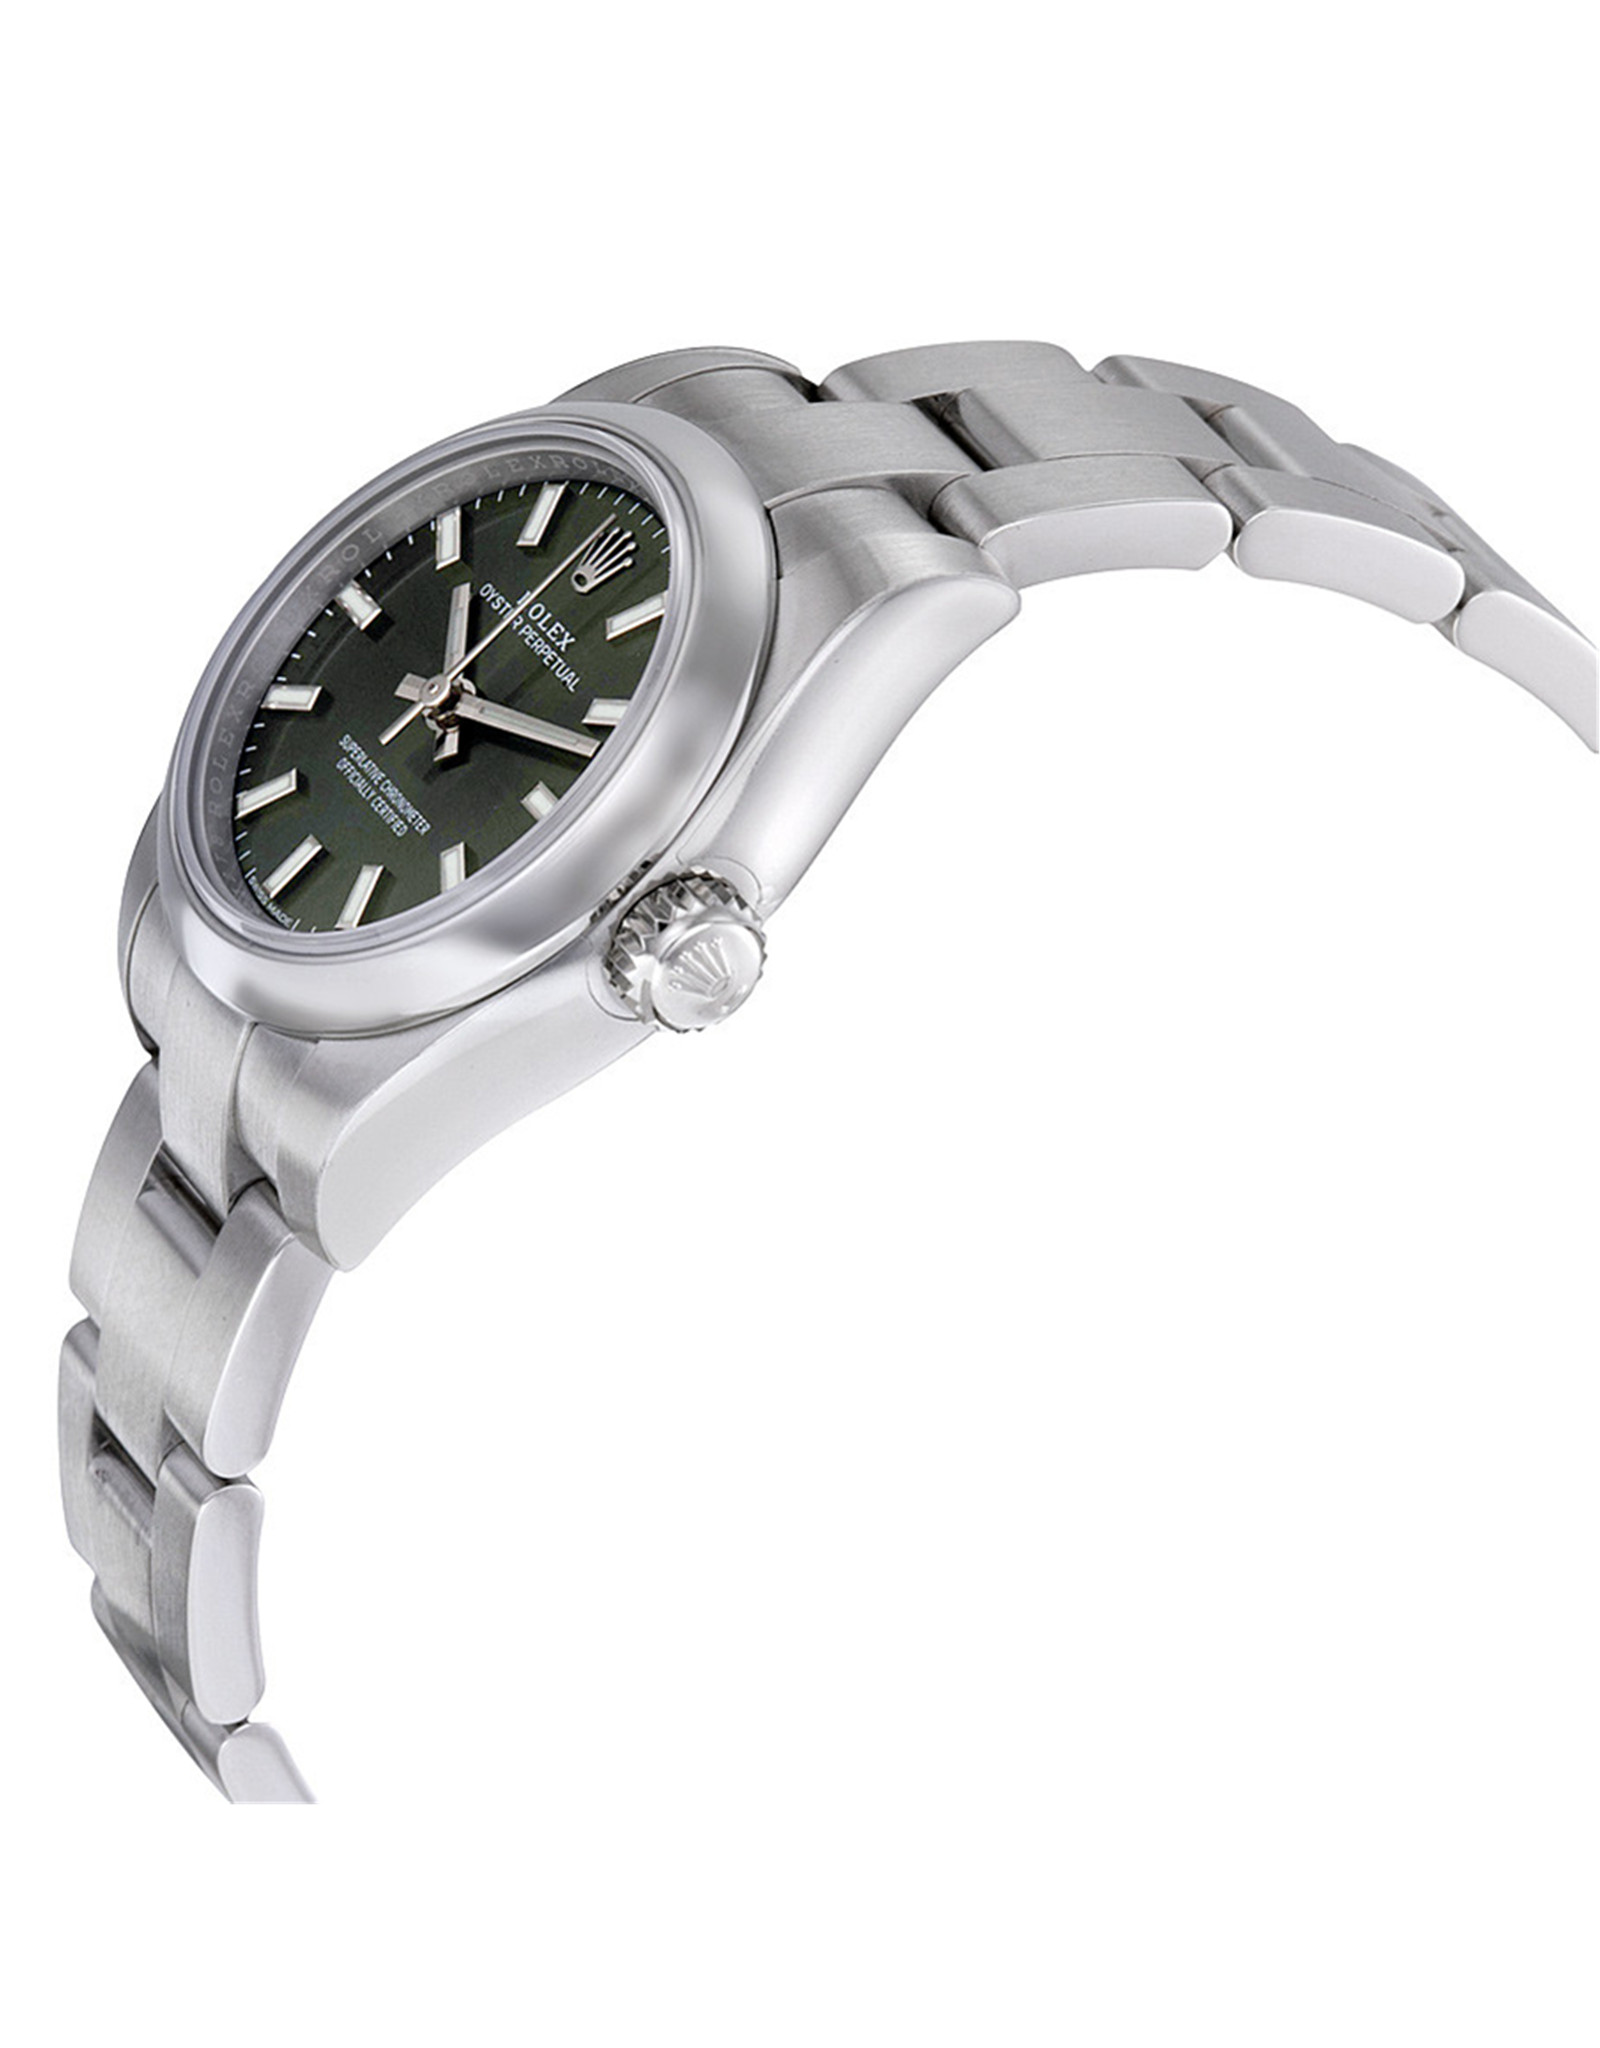 Replicas Relojes Oyster-Perpetual-Date  De Lujo Replica Rolex  Oyster-Perpetual-Date Baratos